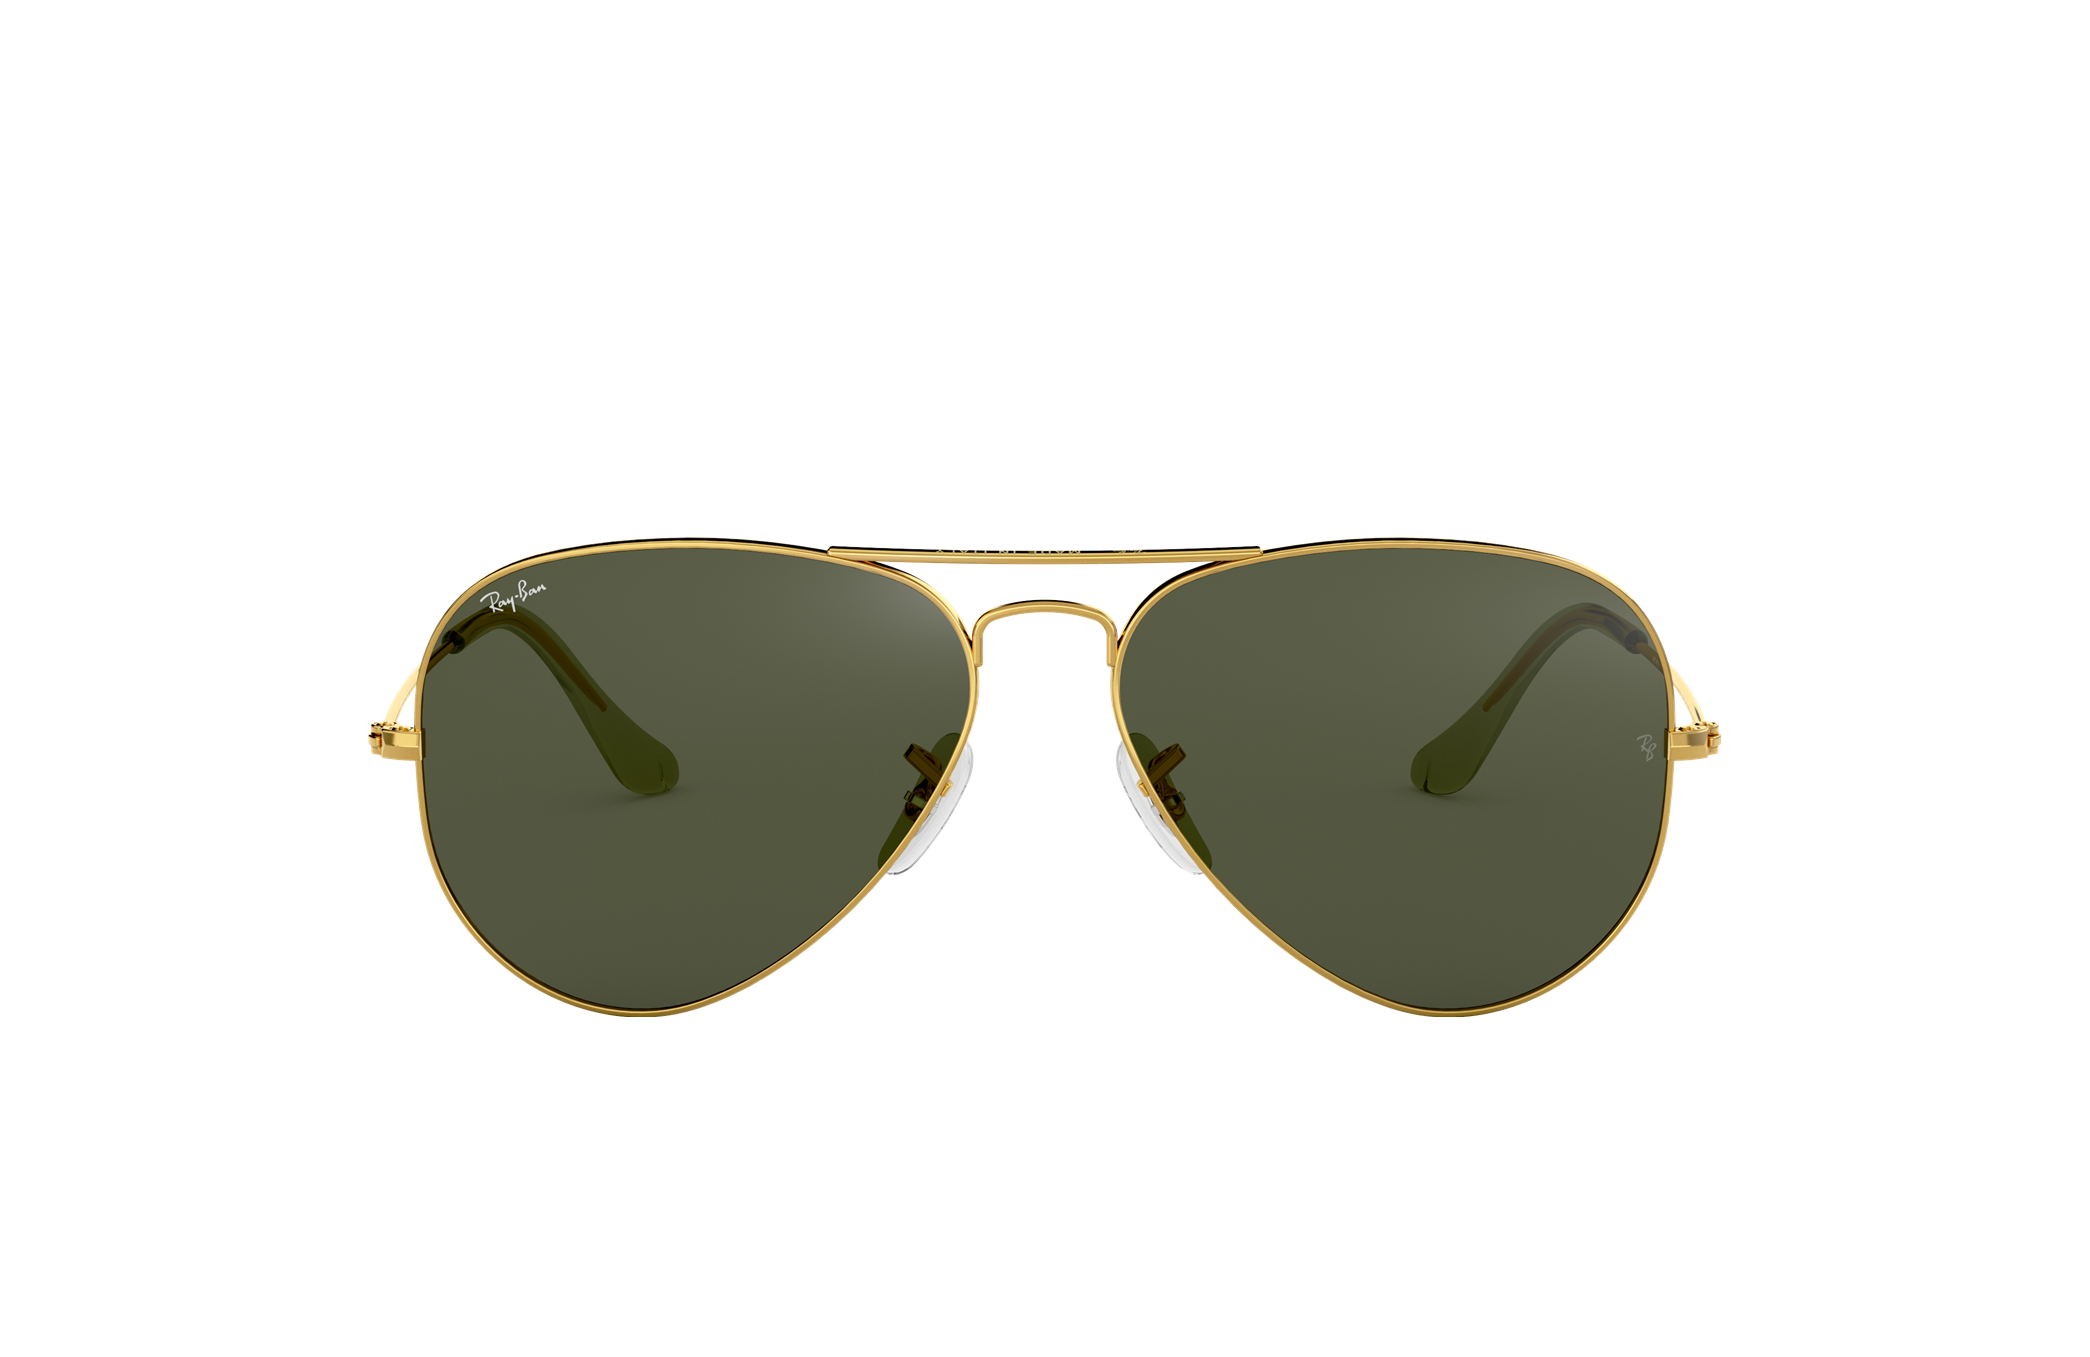 WOMEN FASHION Accessories Sunglasses Golden Single Ray Ban Green lens aviator glasses discount 44% 